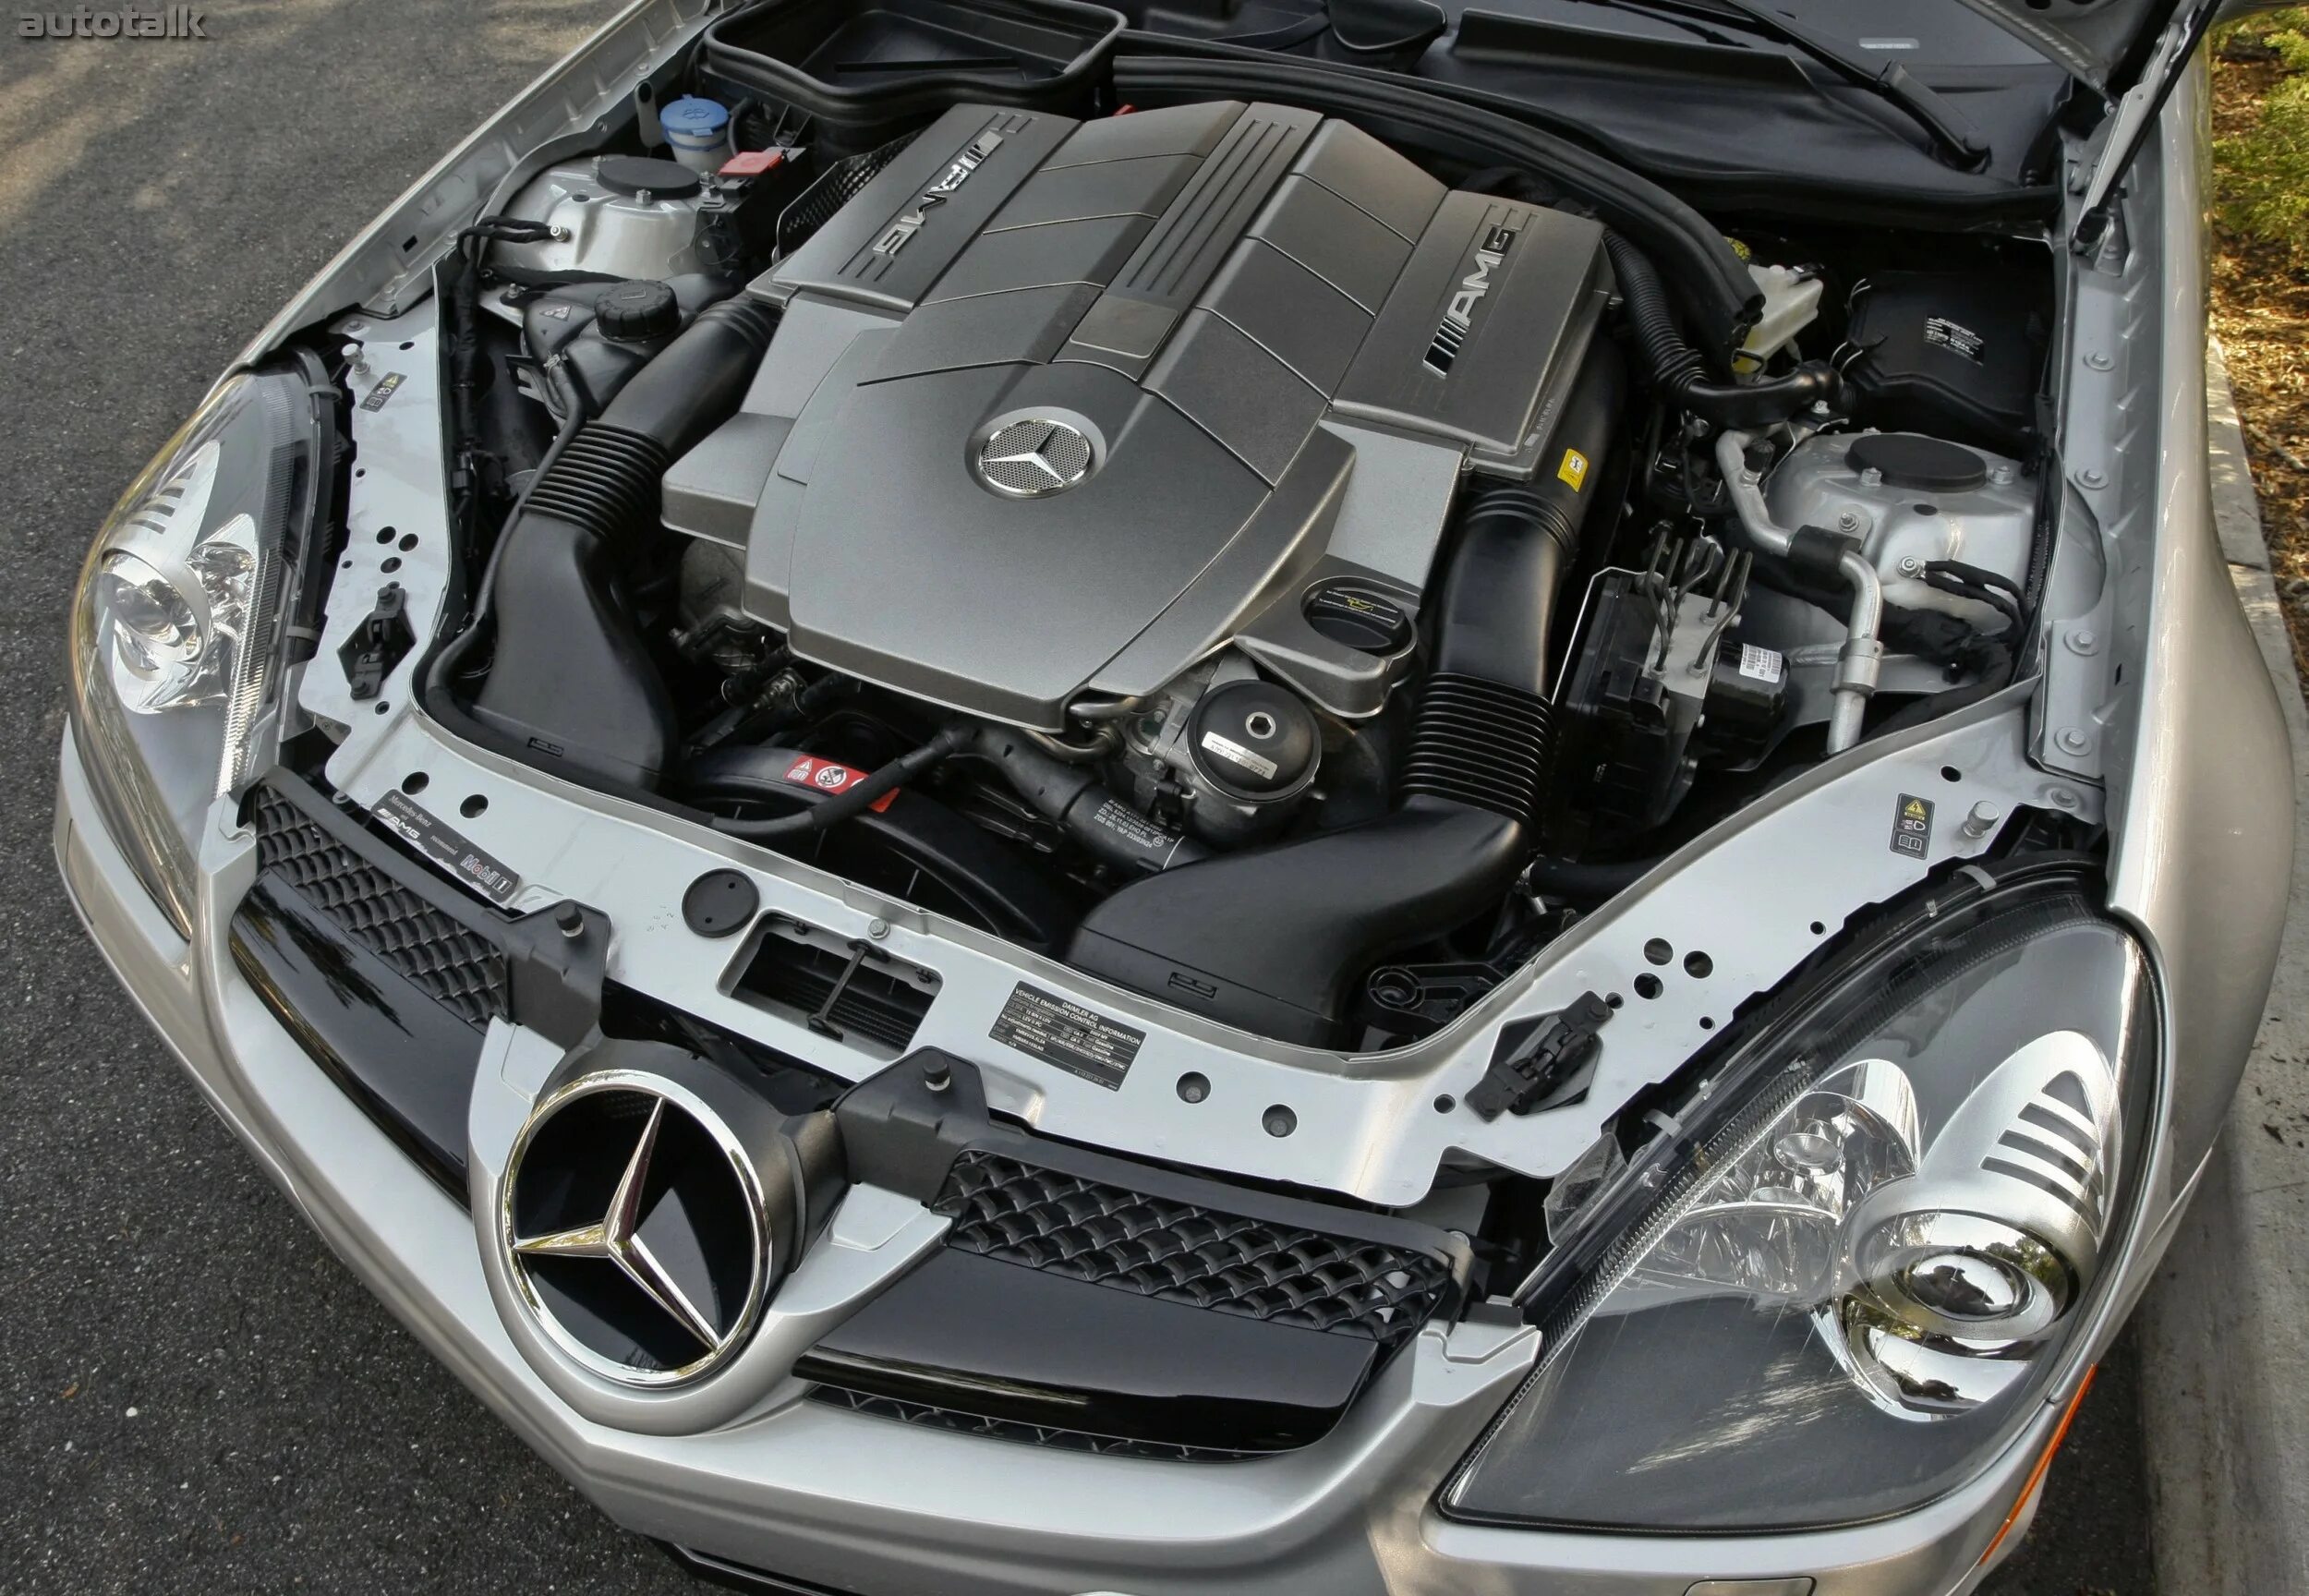 M113 Мерседес. Mercedes-Benz m113 engine. Мерседес АМГ мотор. 171 Мотор Мерседес.